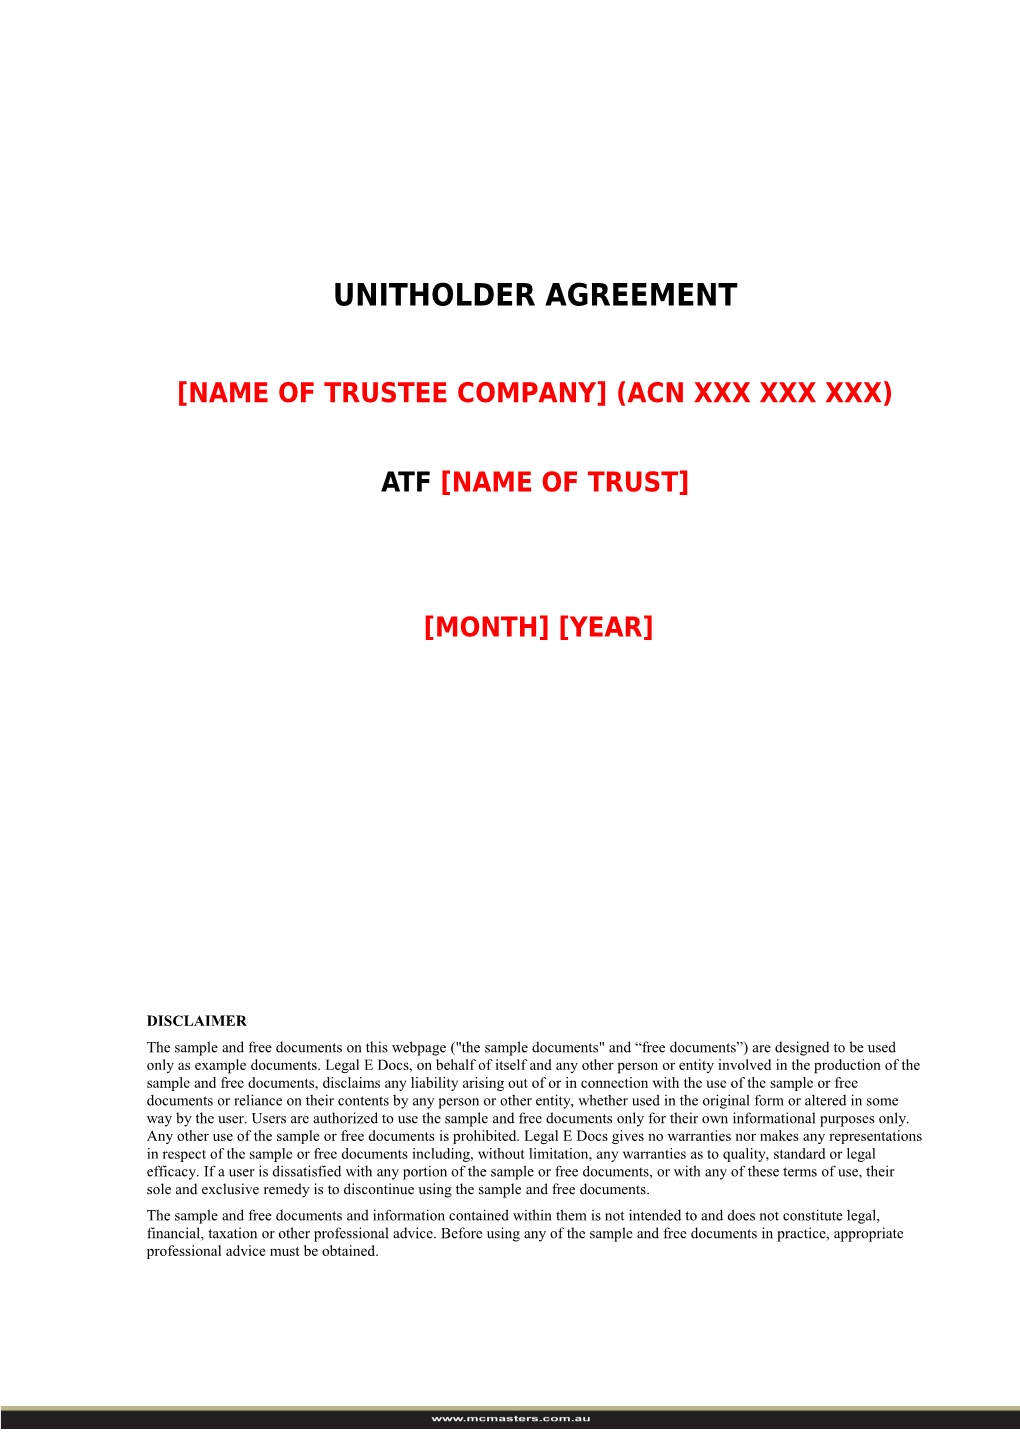 Name of Trustee Company (Acn Xxx Xxx Xxx)